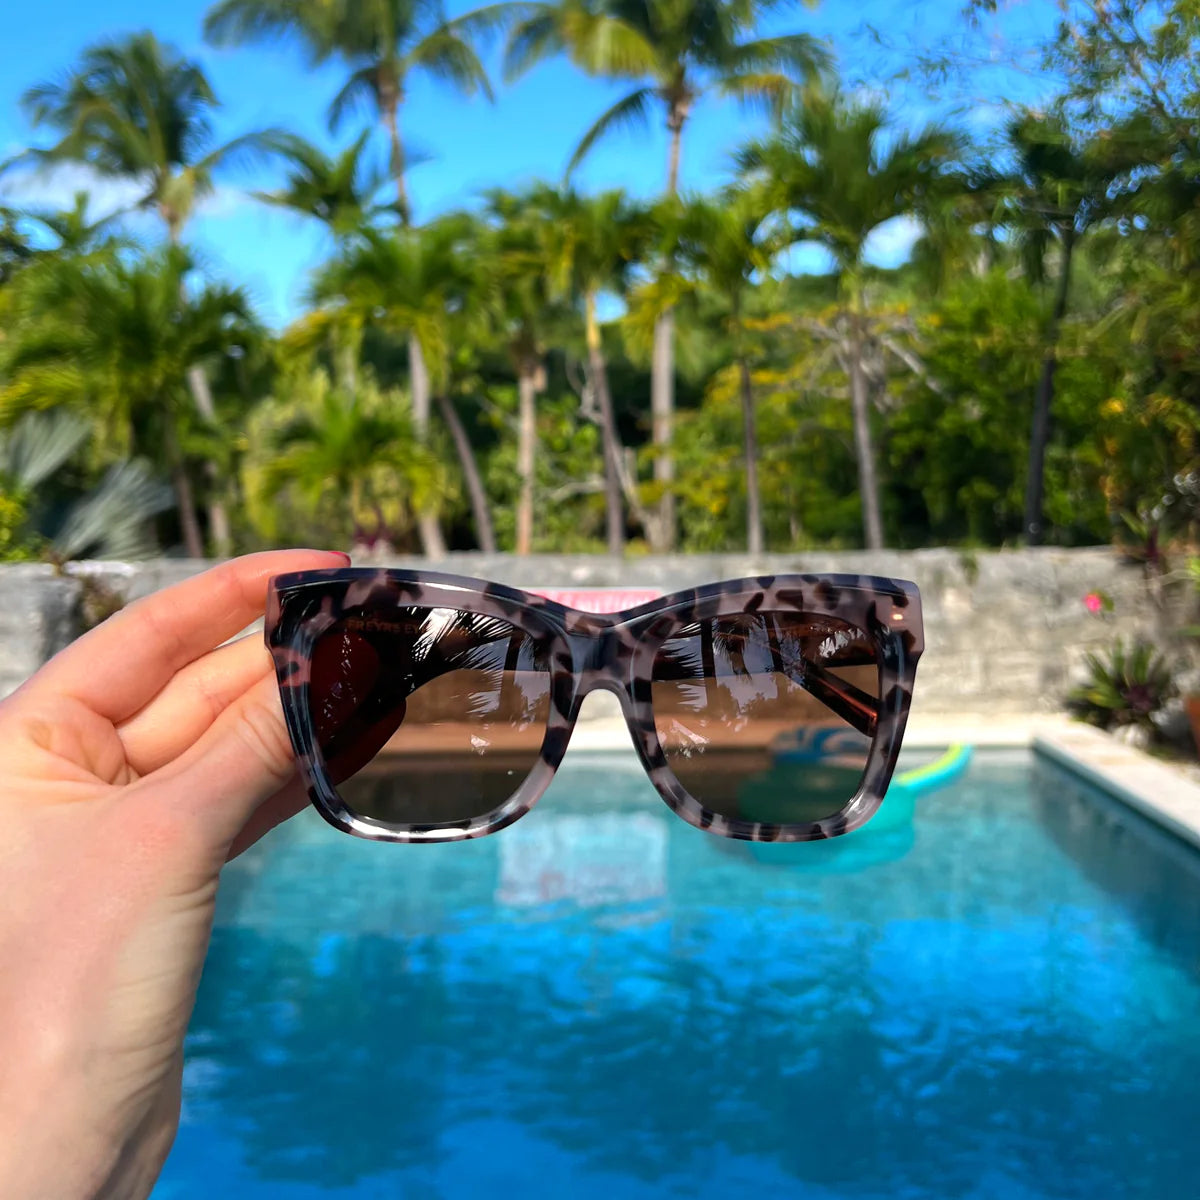 PALERMO Sunglasses in Pink Tortoise by Freyrs Eyewear